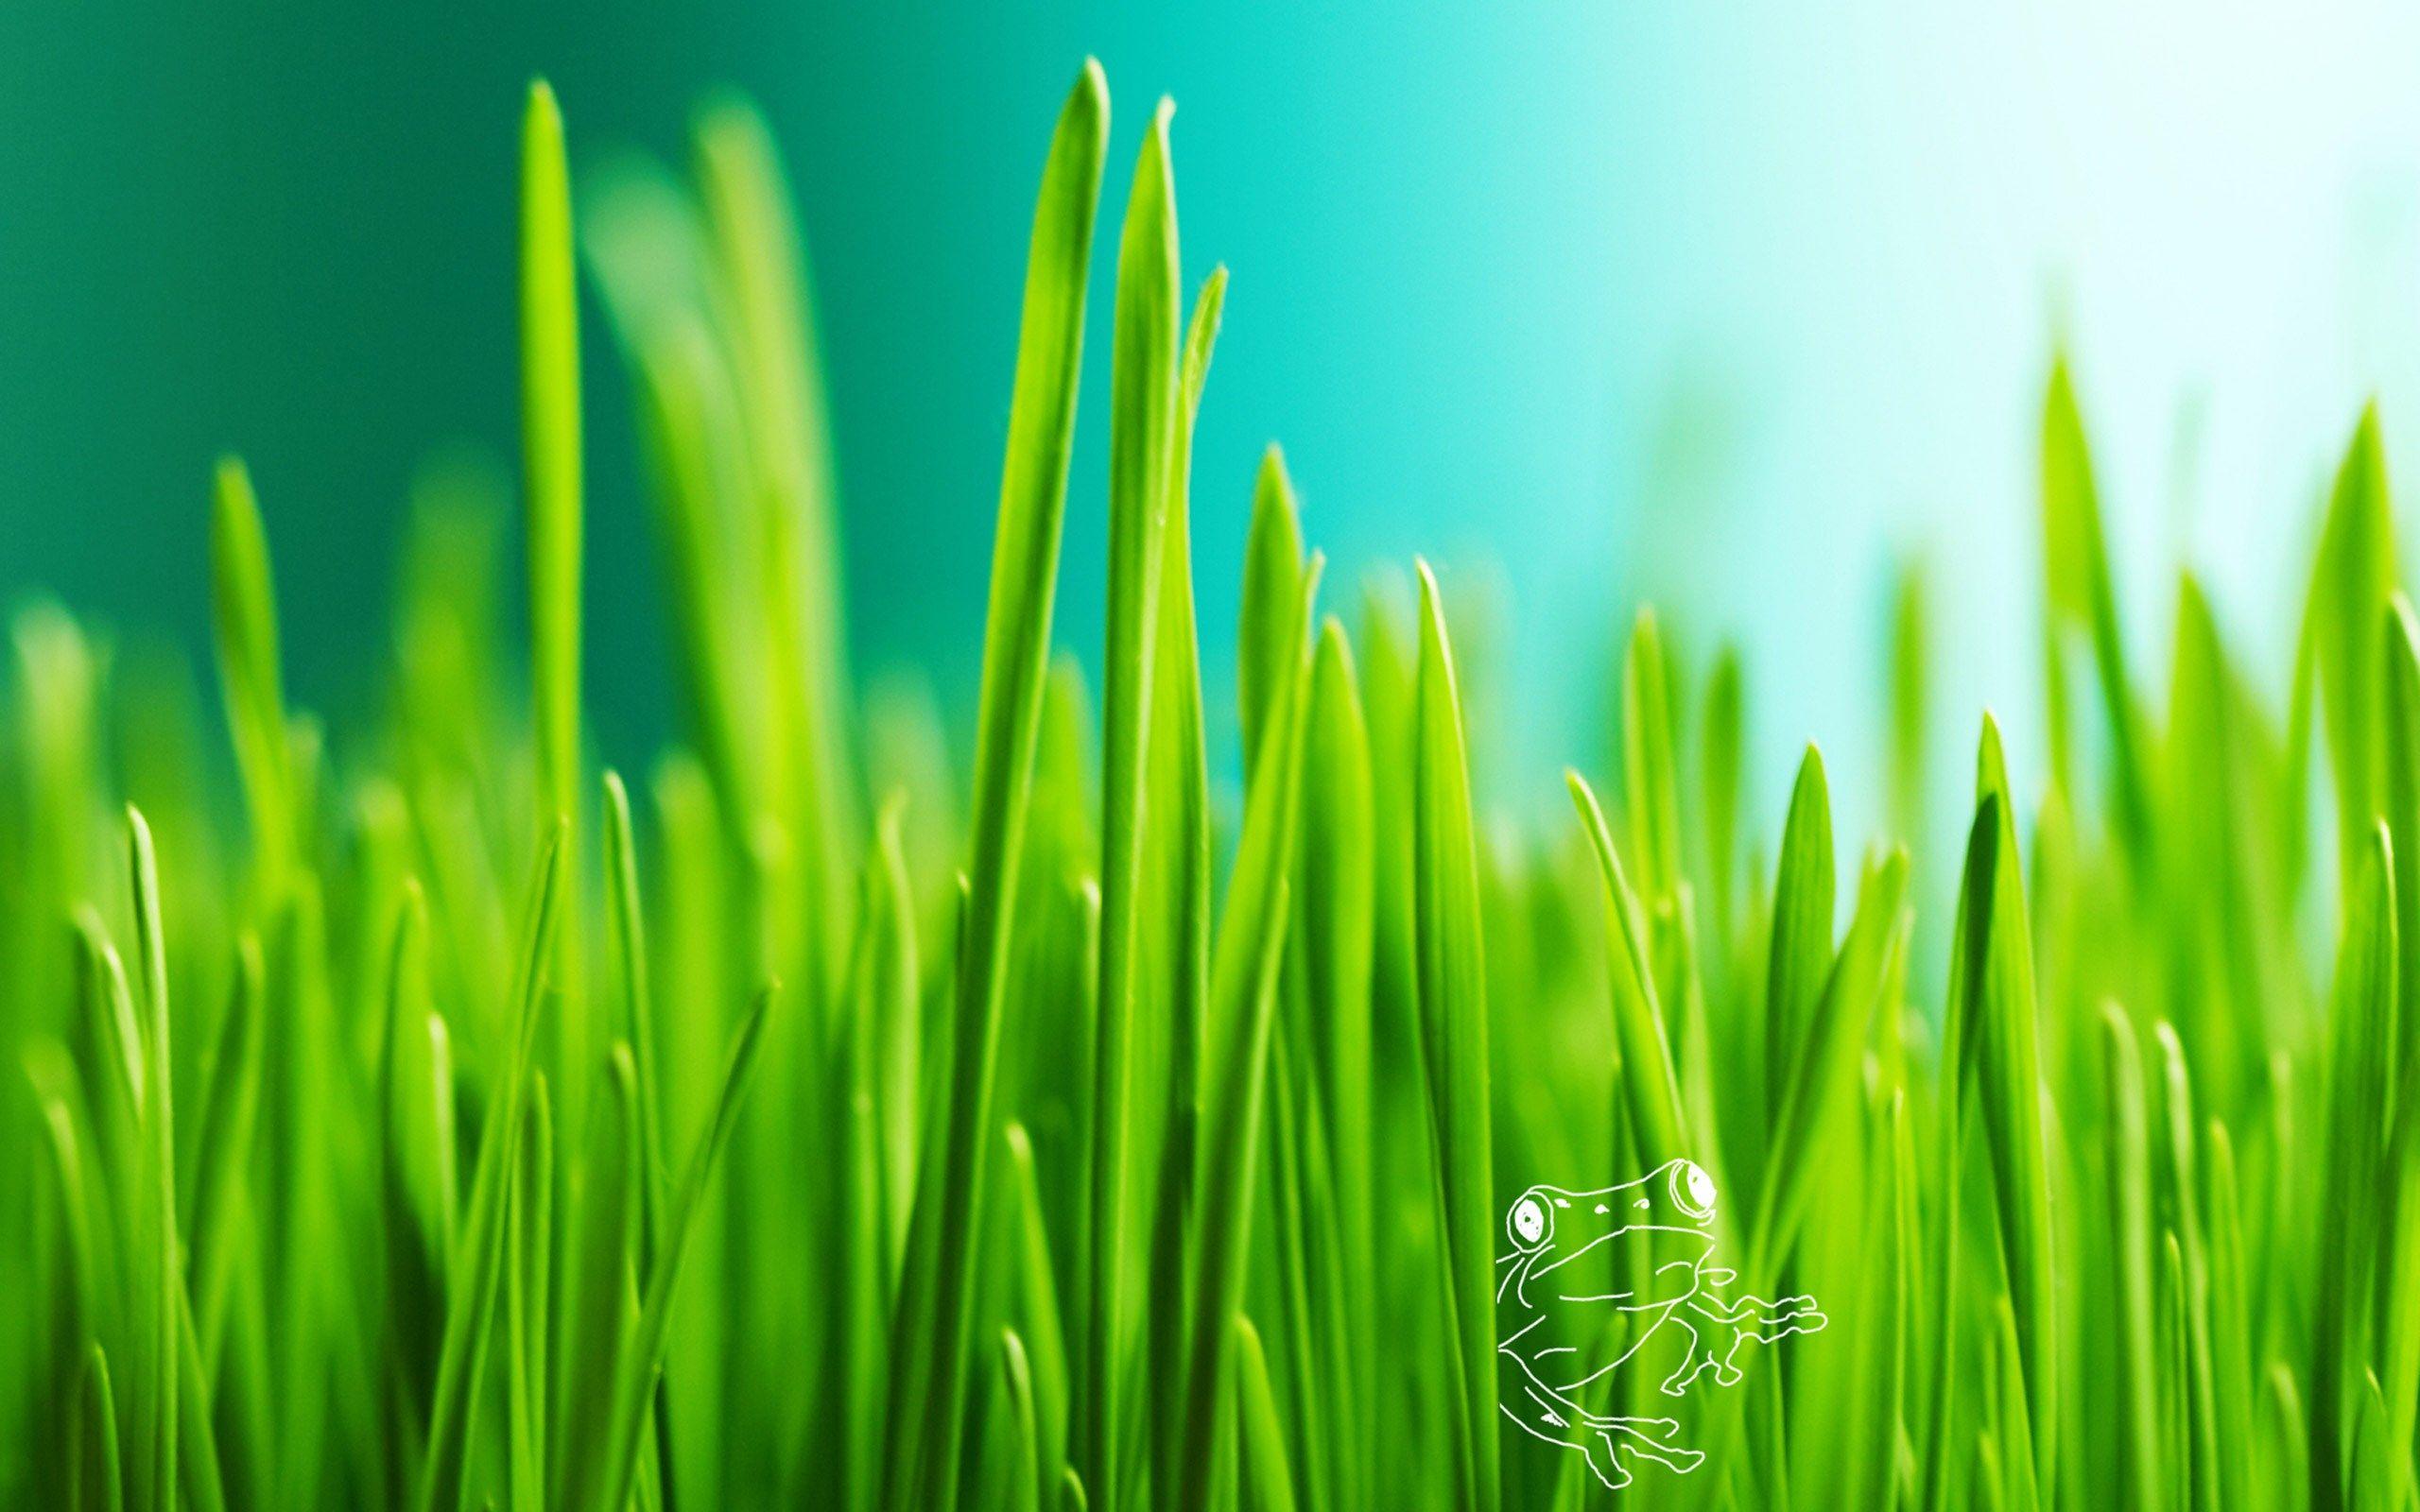 Green Grass Wallpaper - iPhone, Android & Desktop Backgrounds